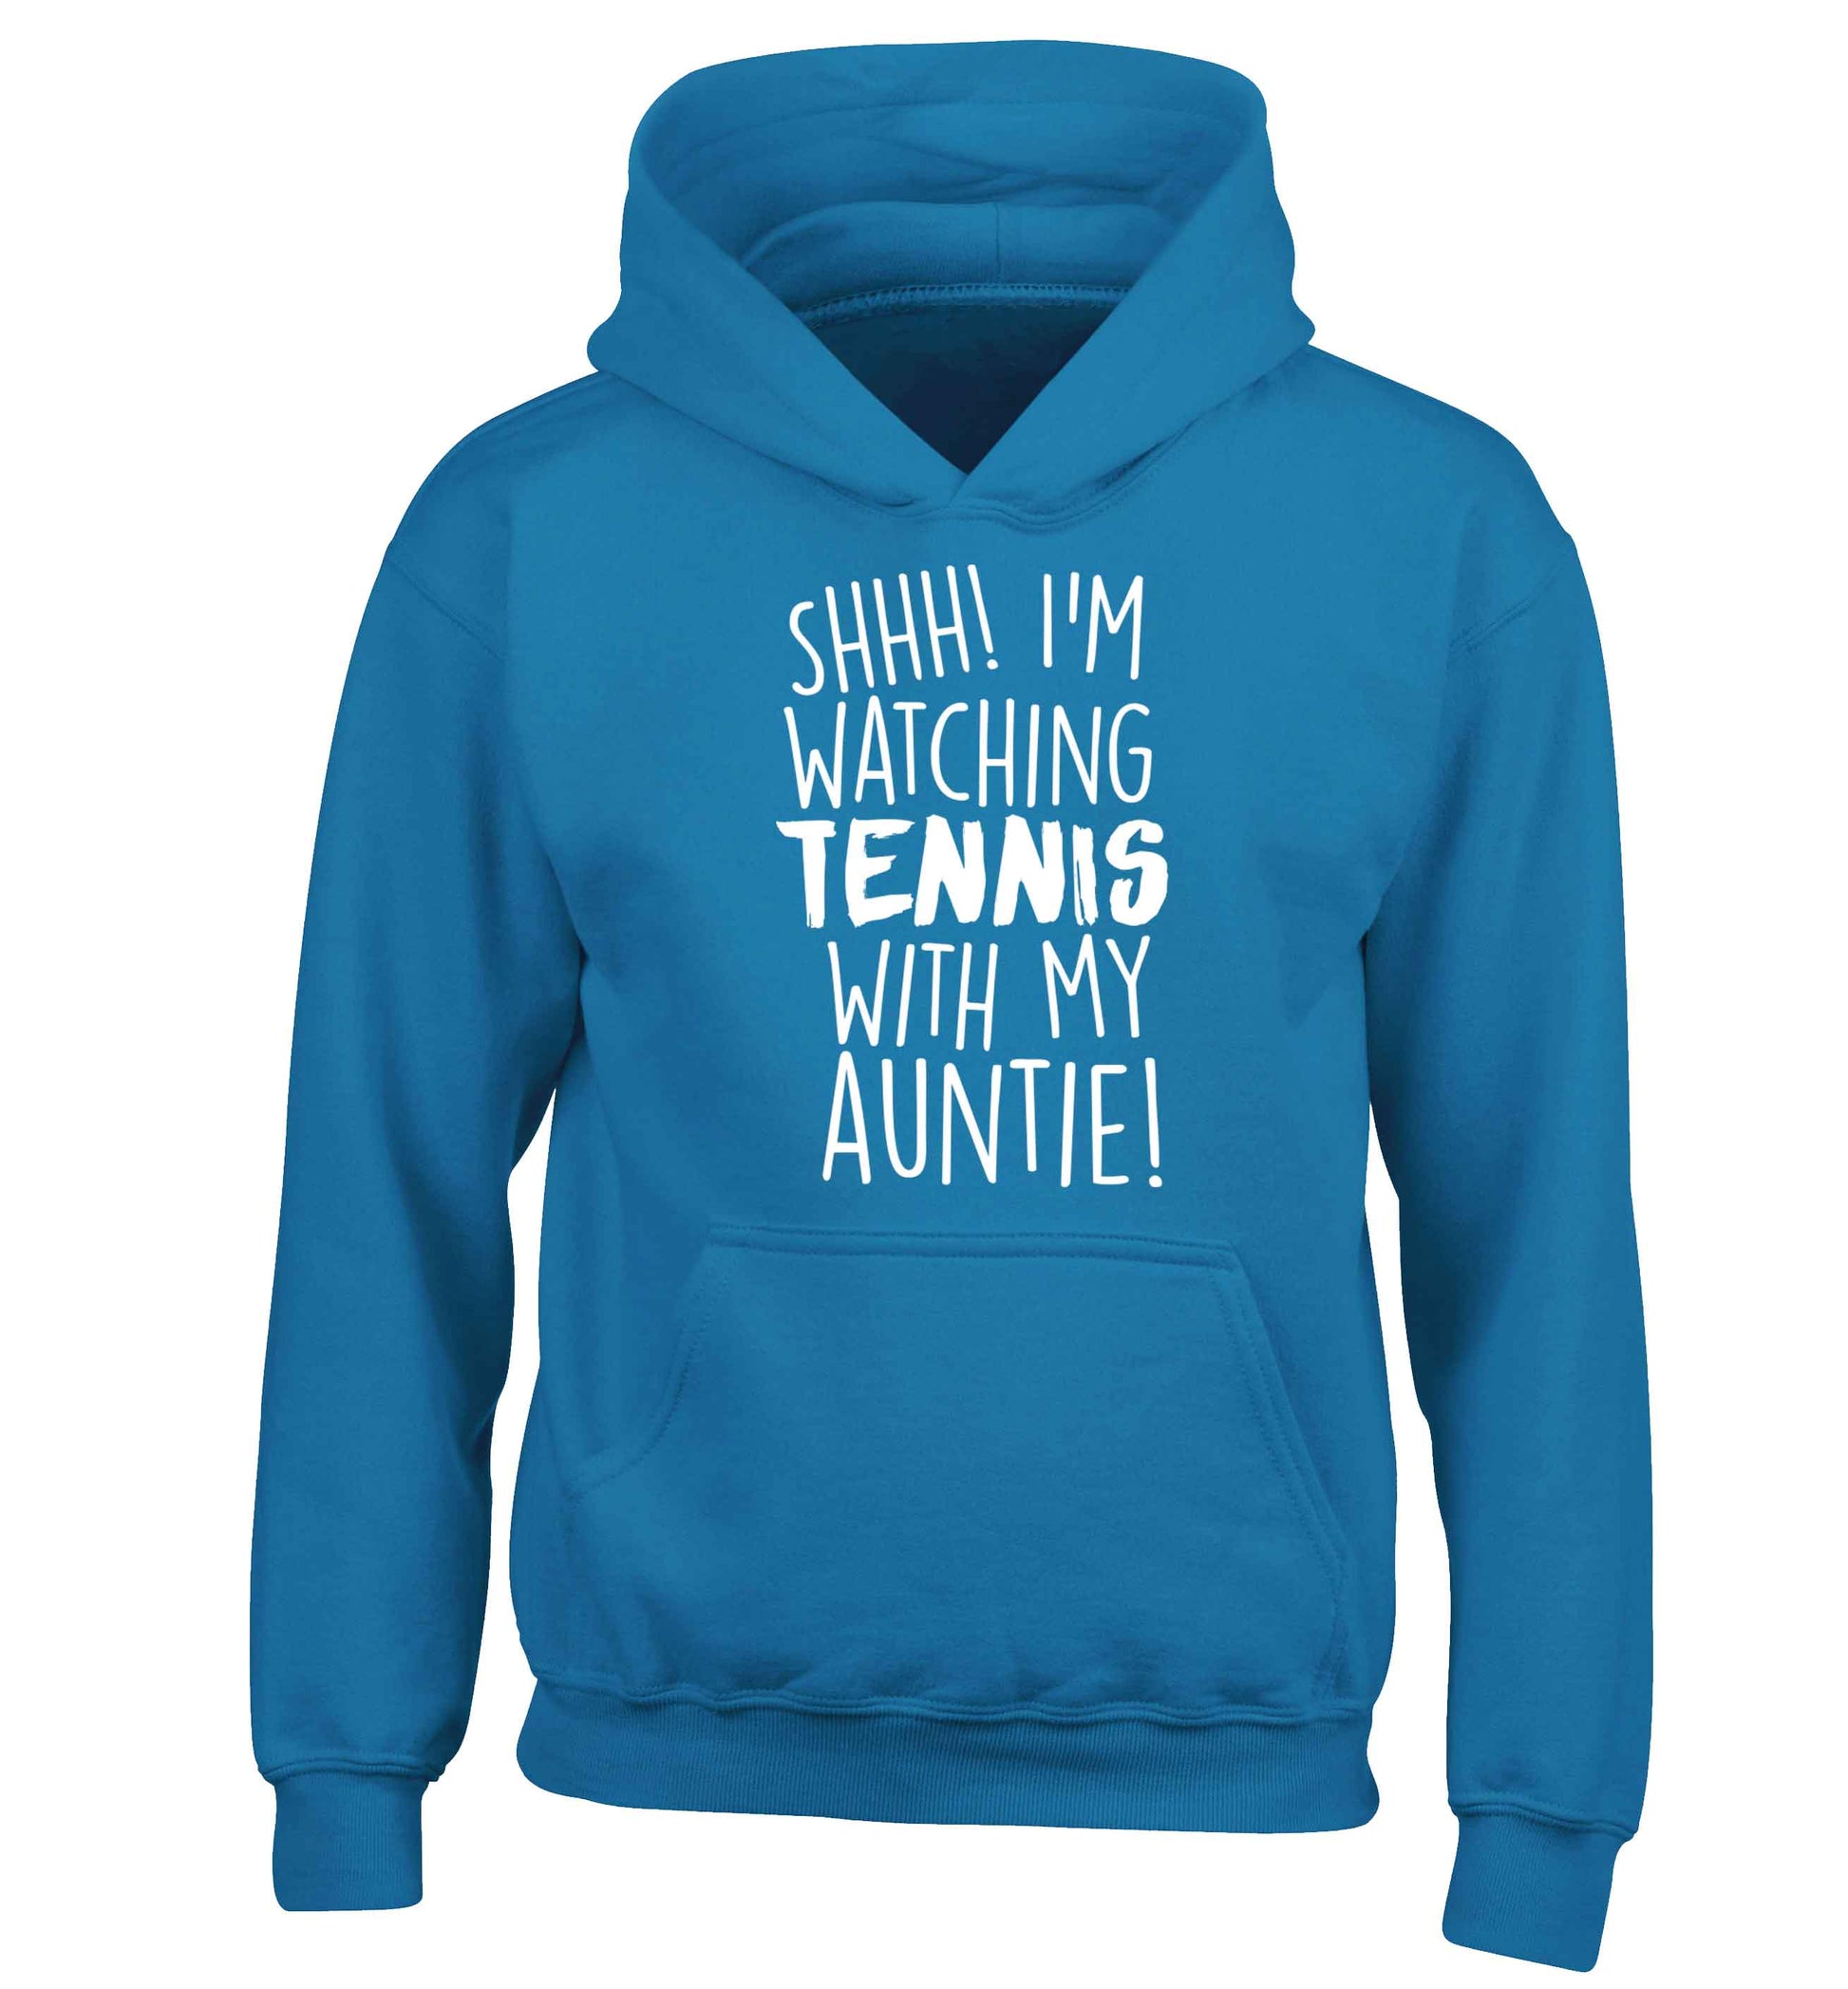 Shh! I'm watching tennis with my auntie! children's blue hoodie 12-13 Years